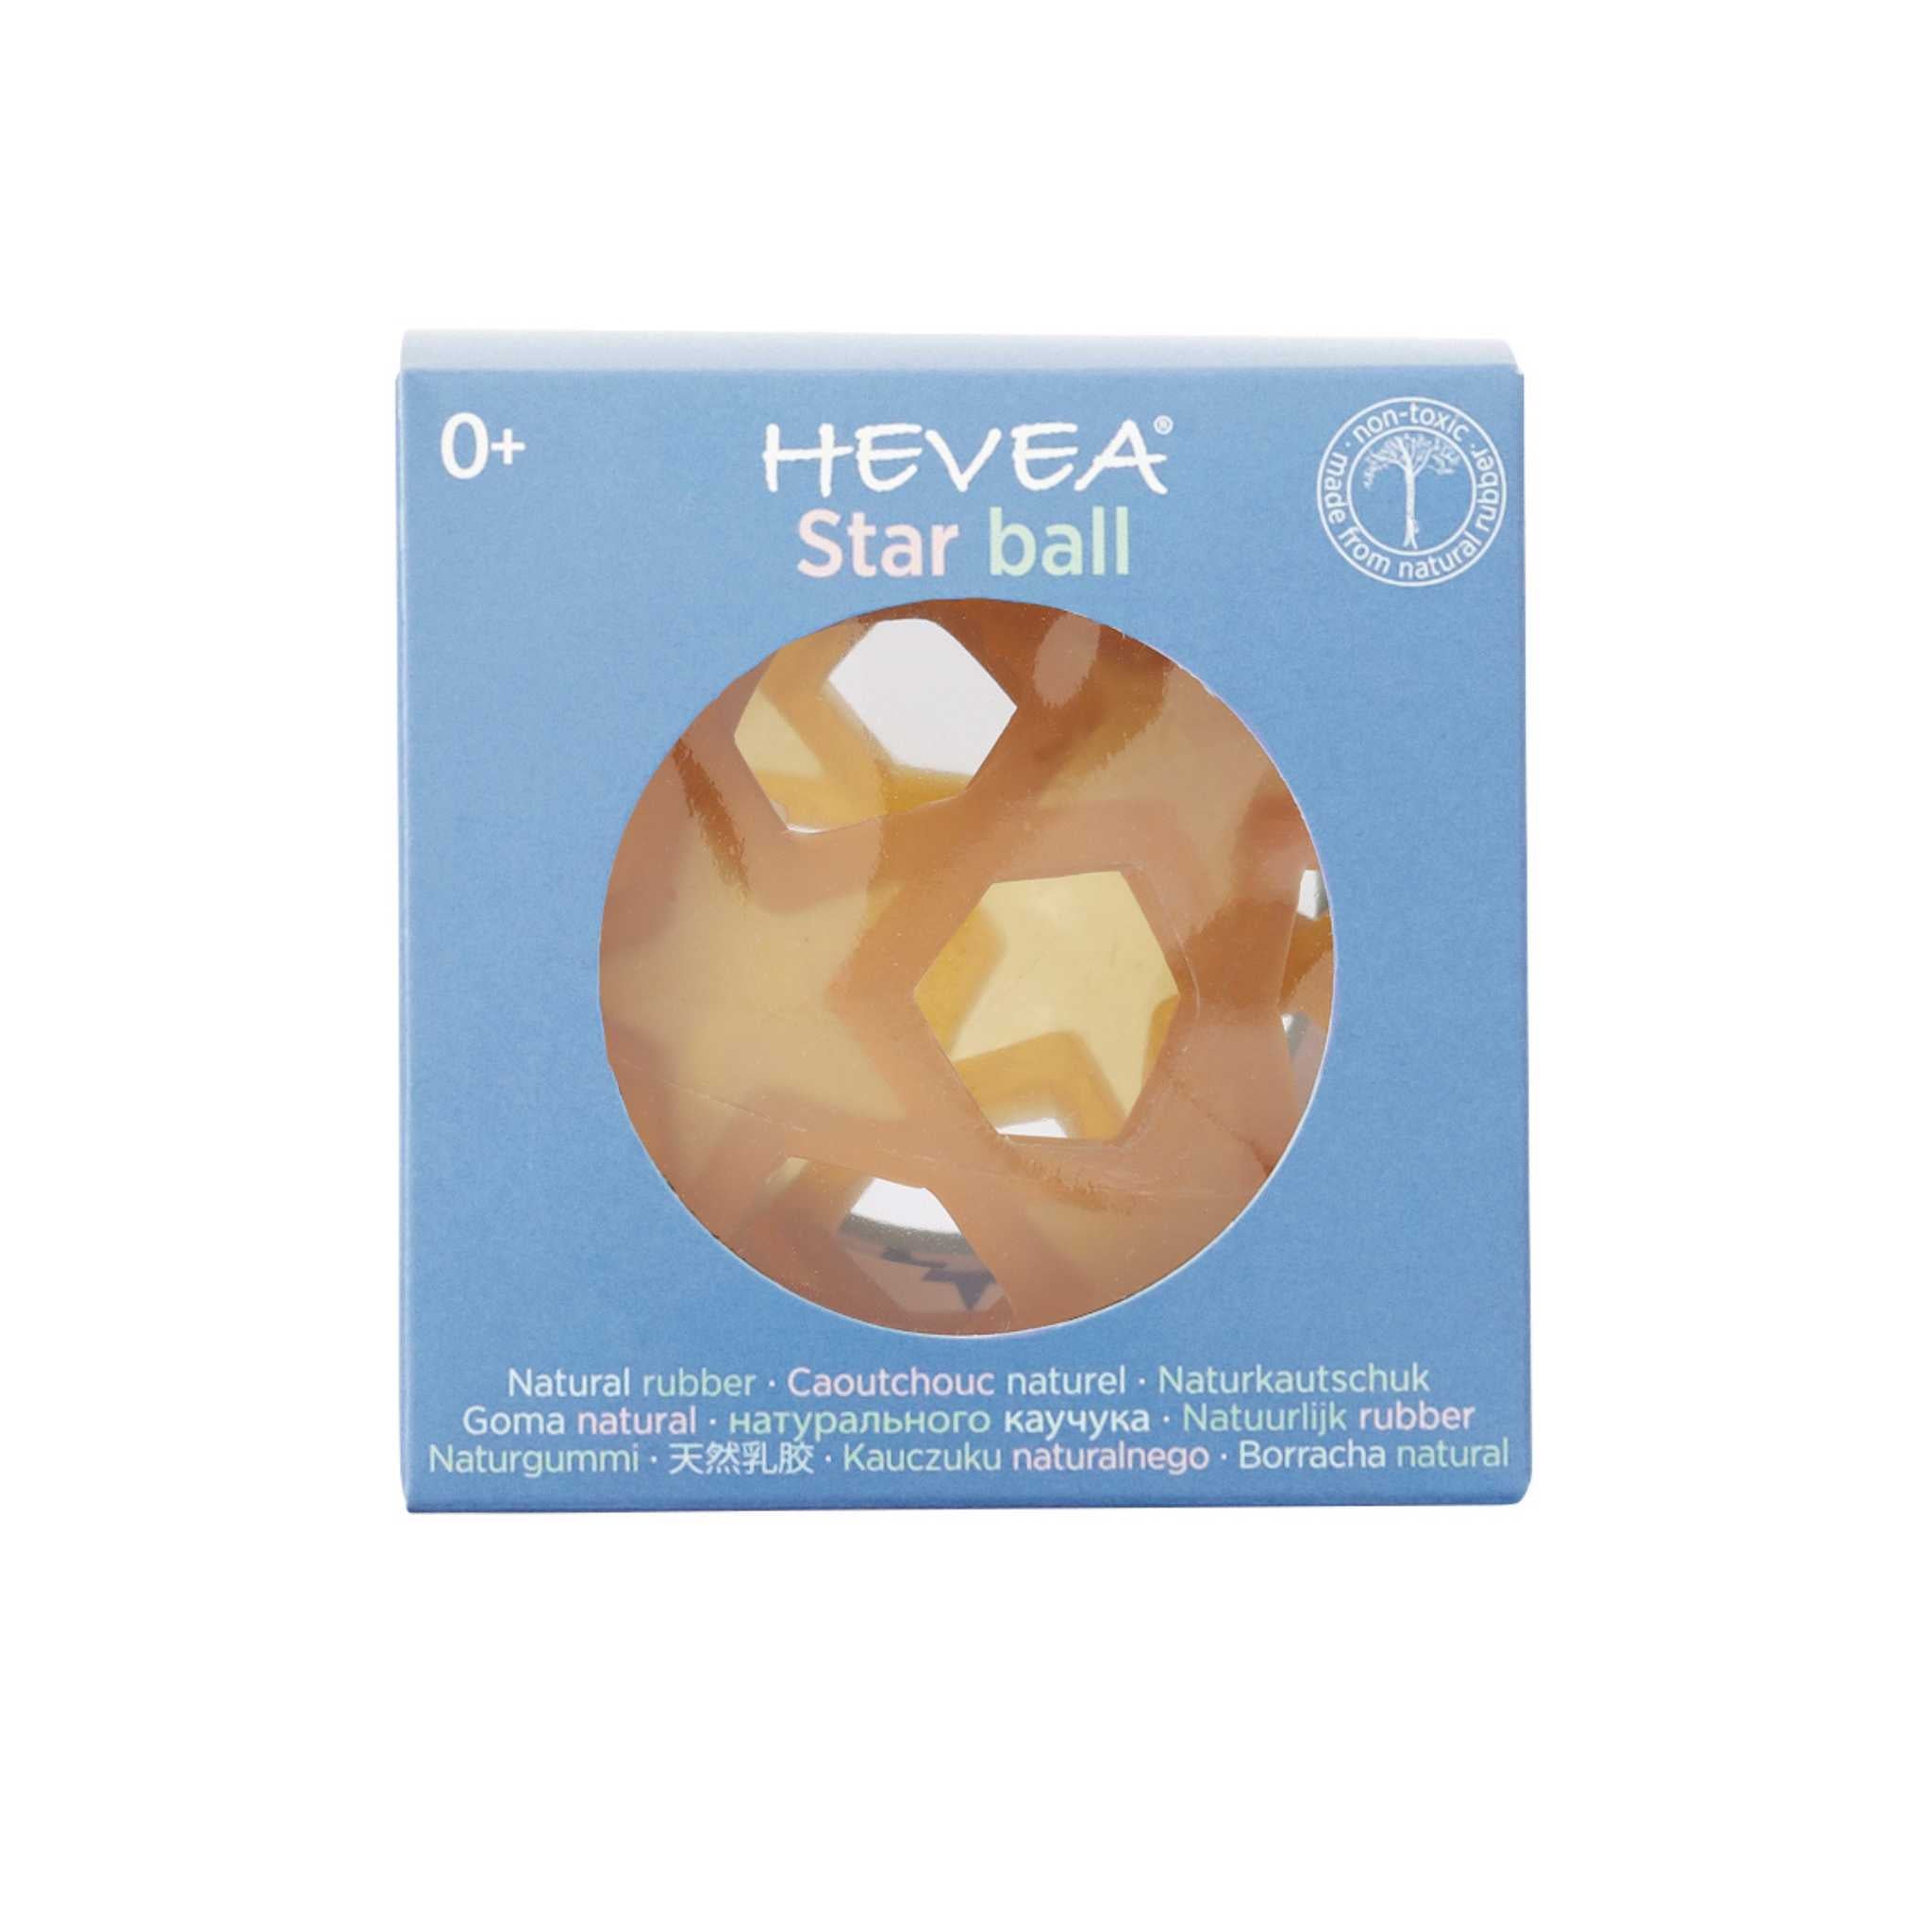 Hevea Star Activity Ball Packaging 